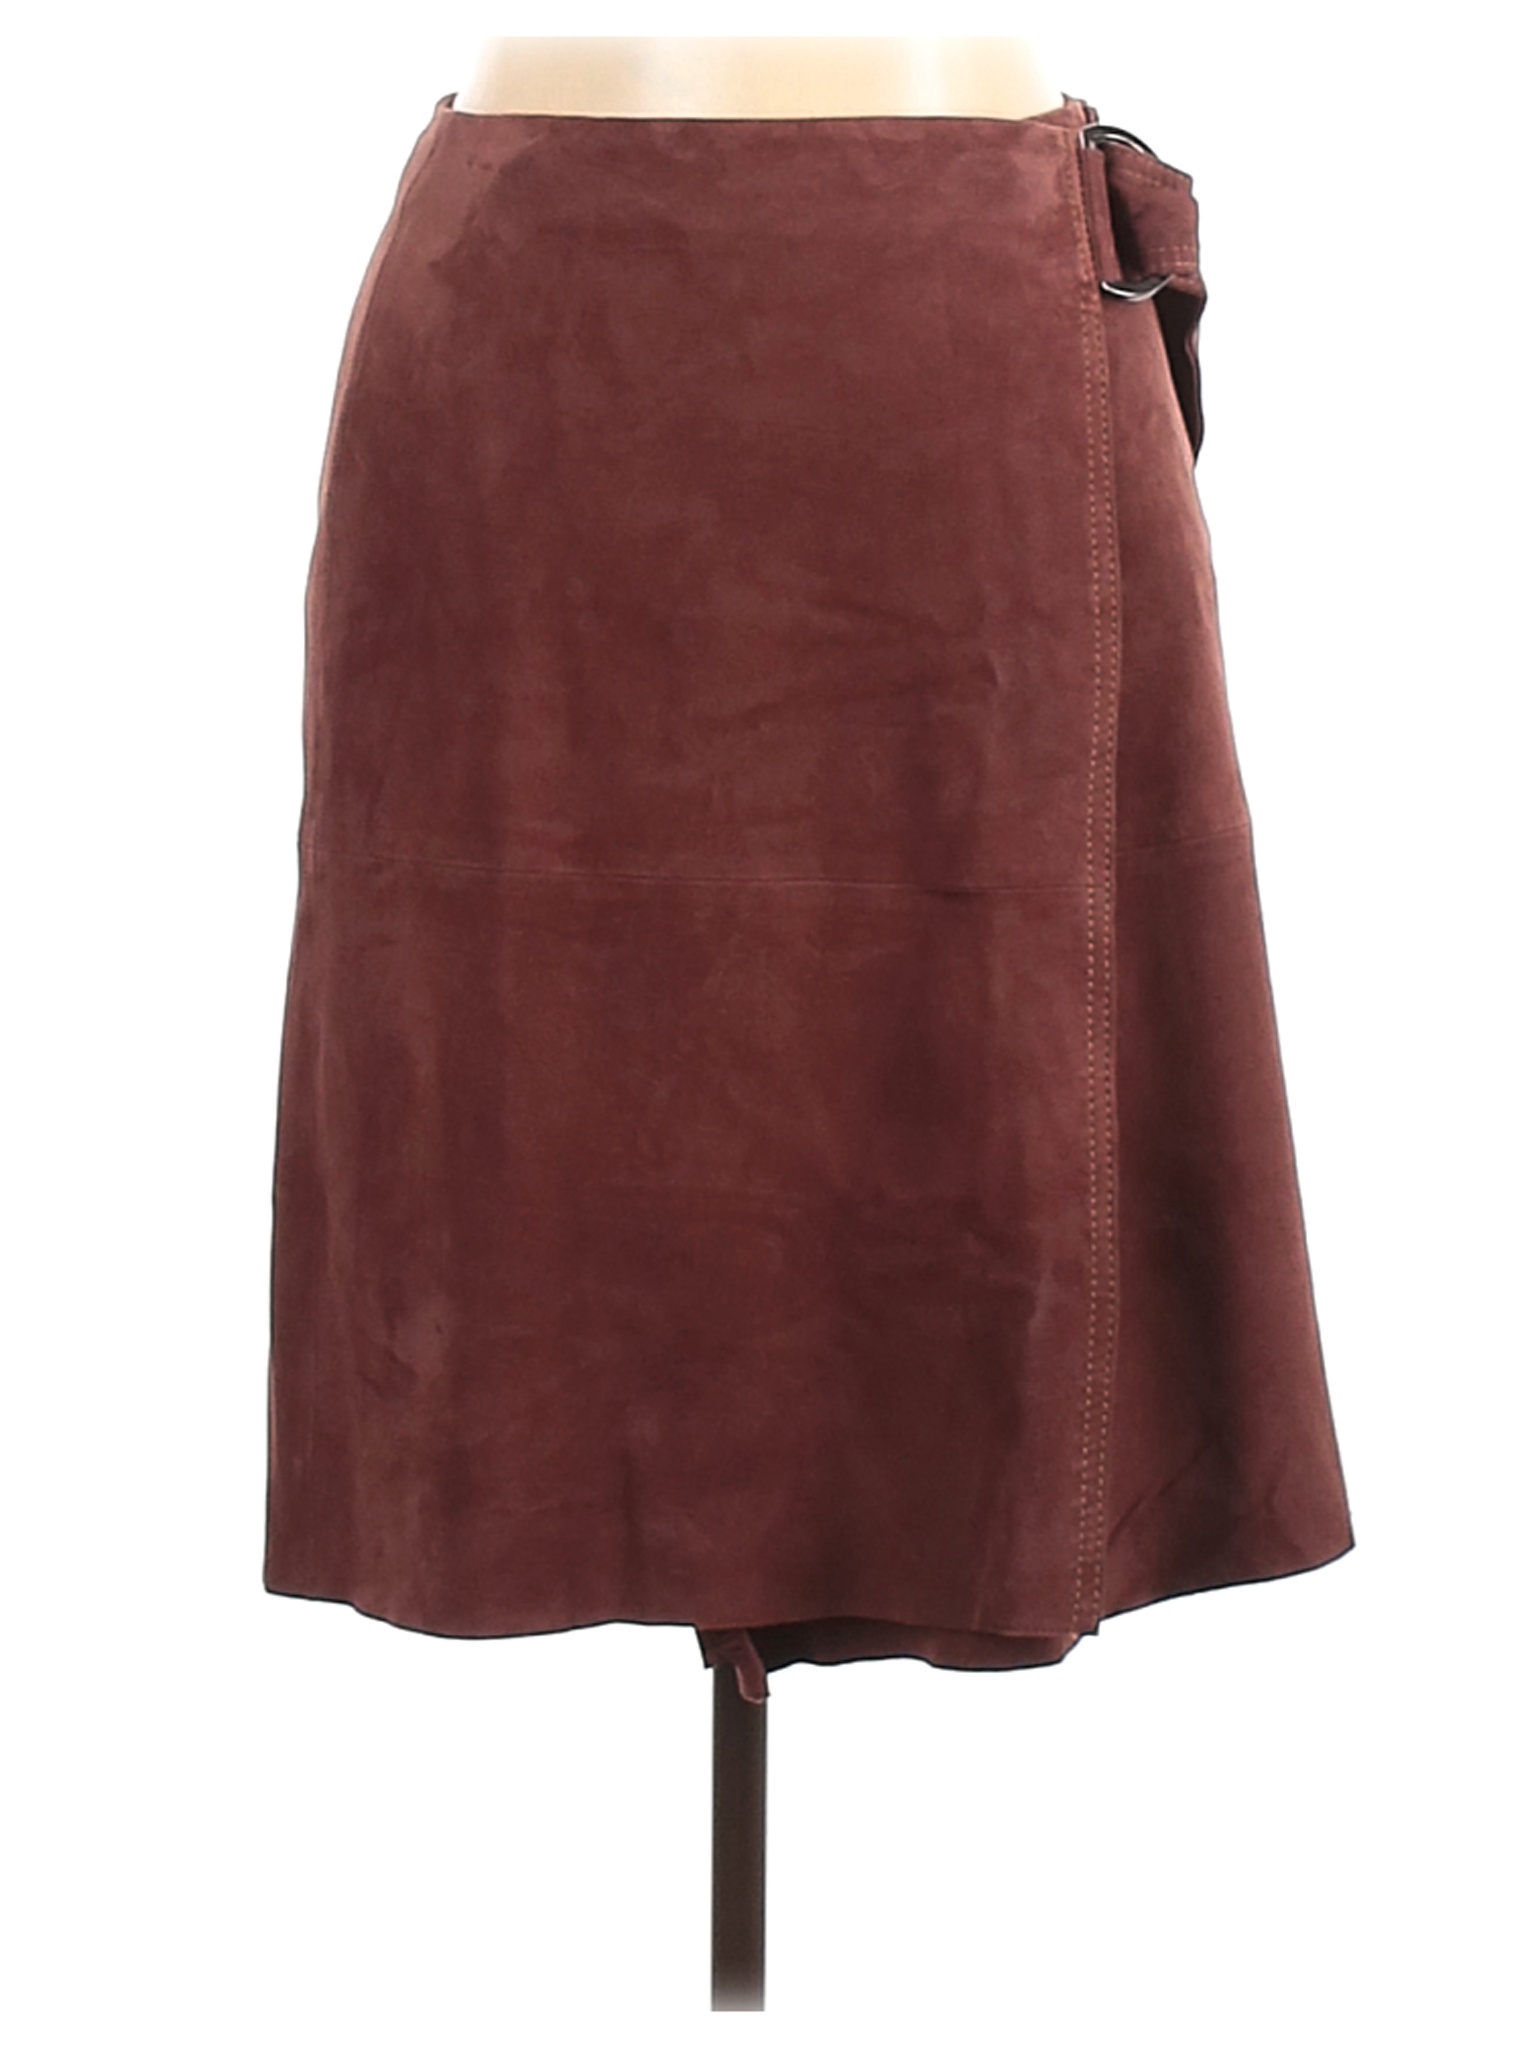 NWT Weekend Max Mara Women Brown Leather Skirt 10 | eBay